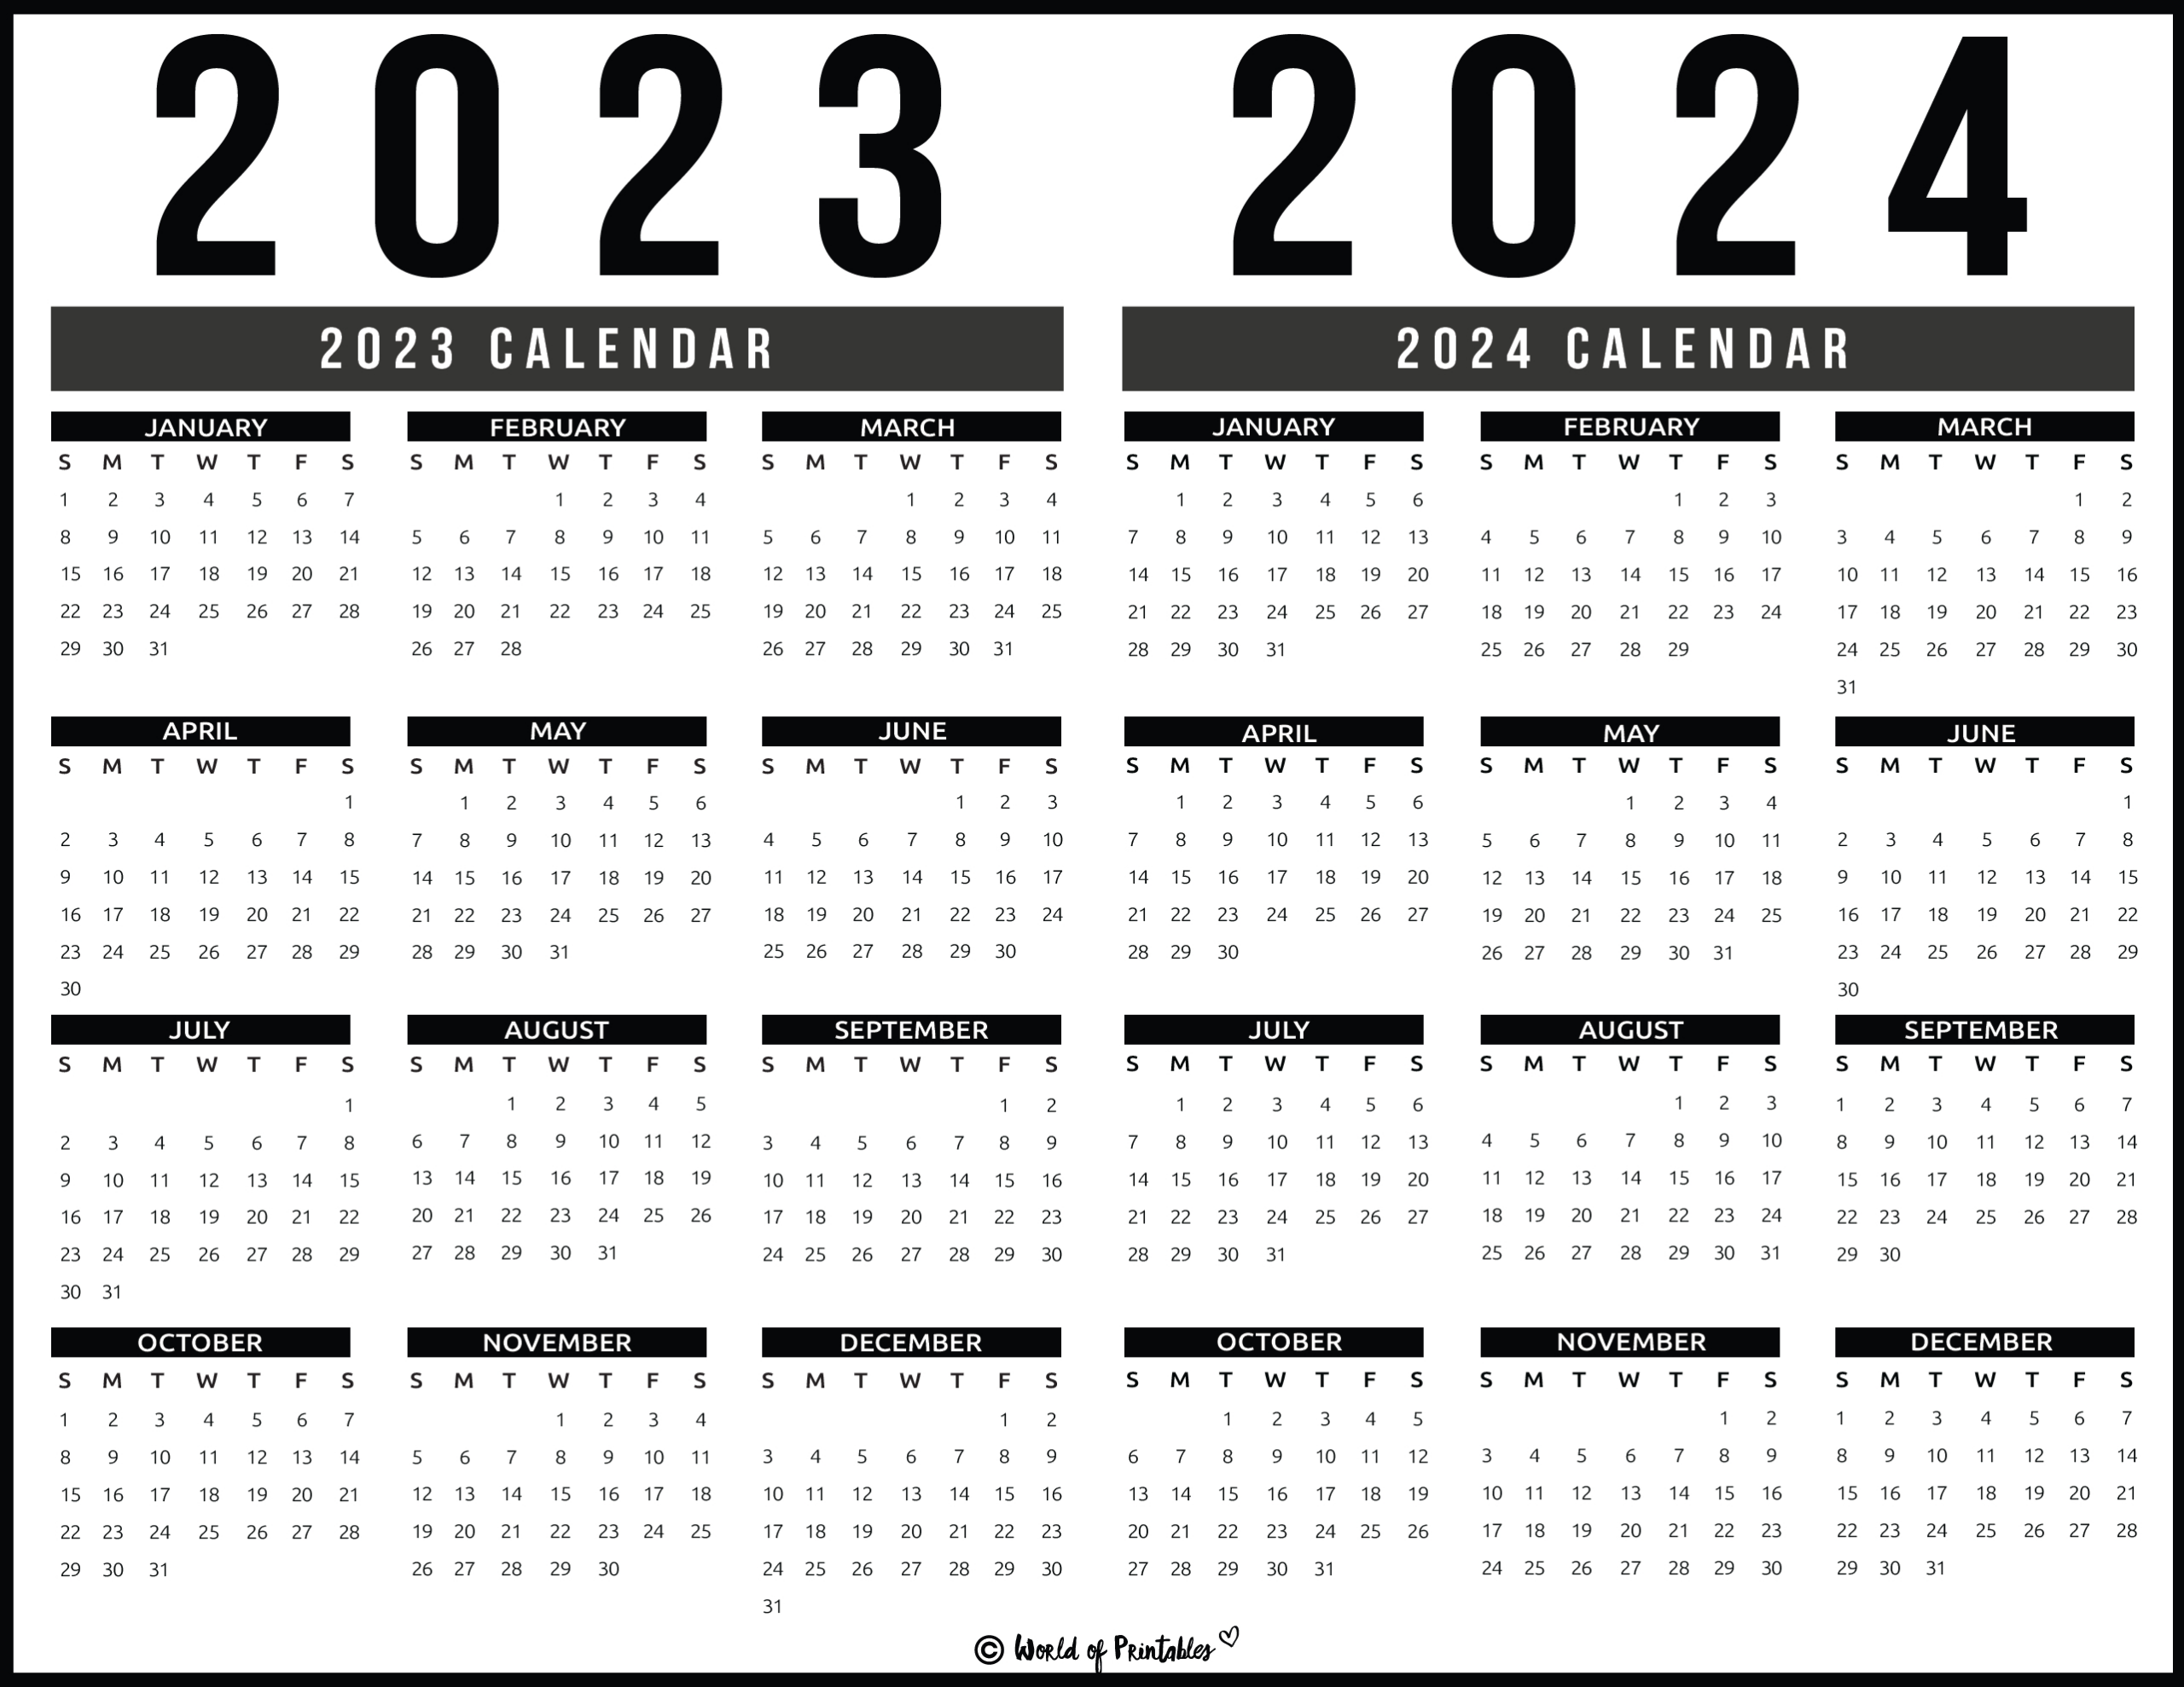 2023 2024 Calendar Free Printables - World Of Printables | 2023 And 2024 Calendar Printable